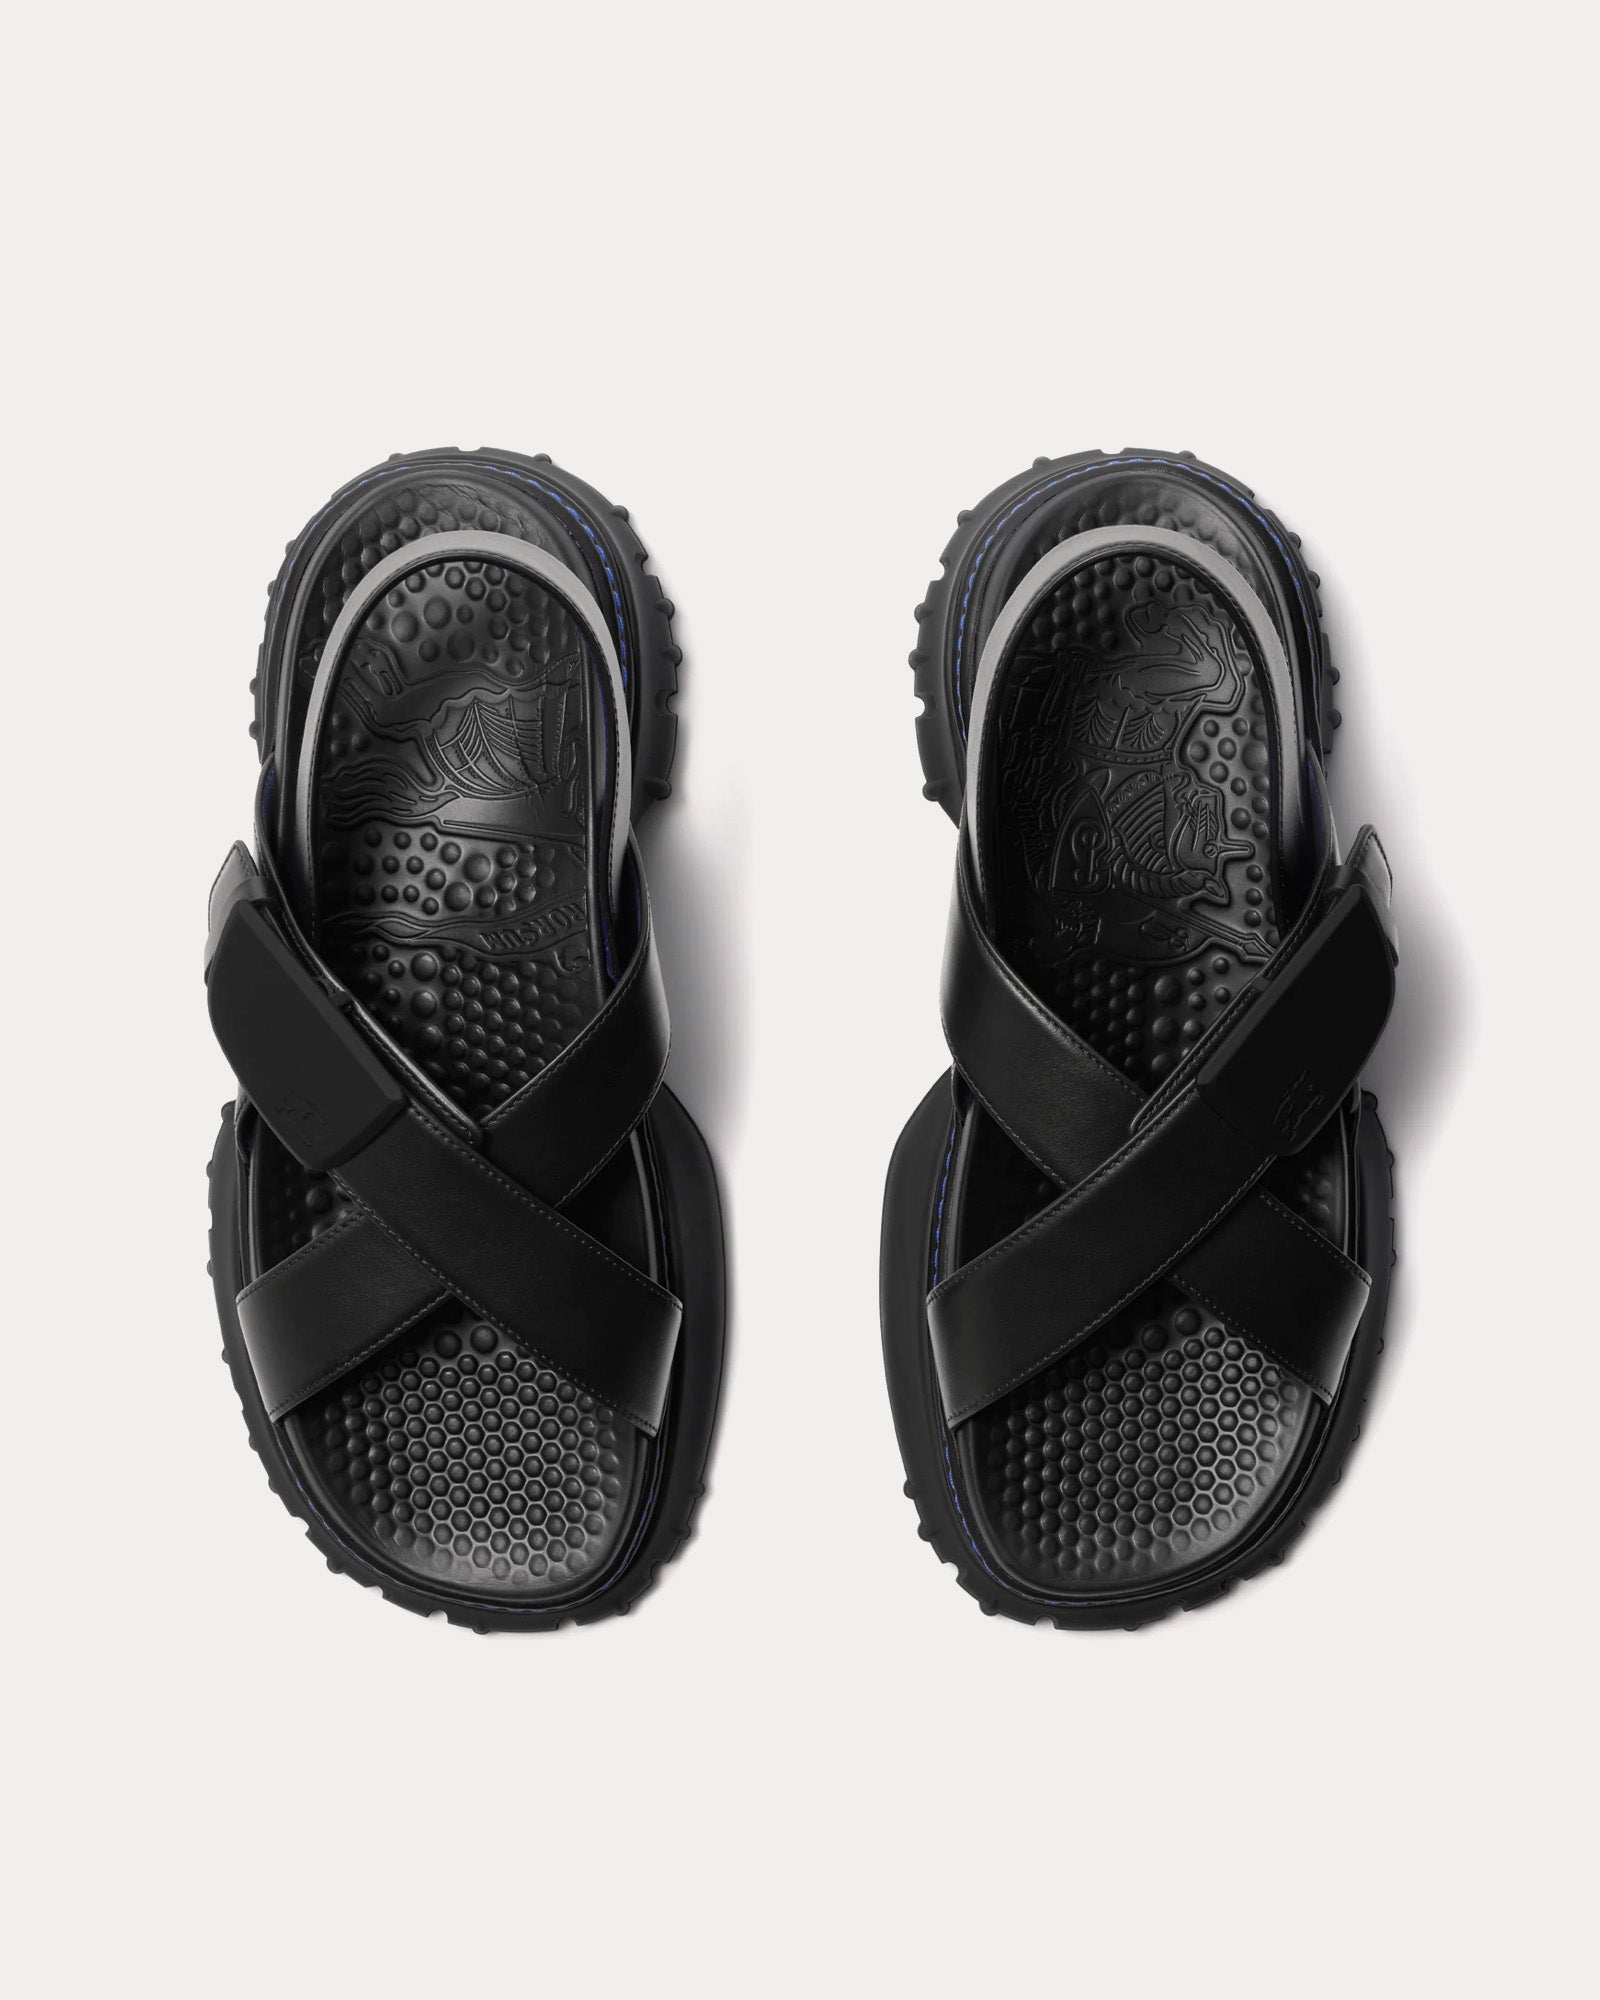 Burberry - Pebble Leather Black Sandals